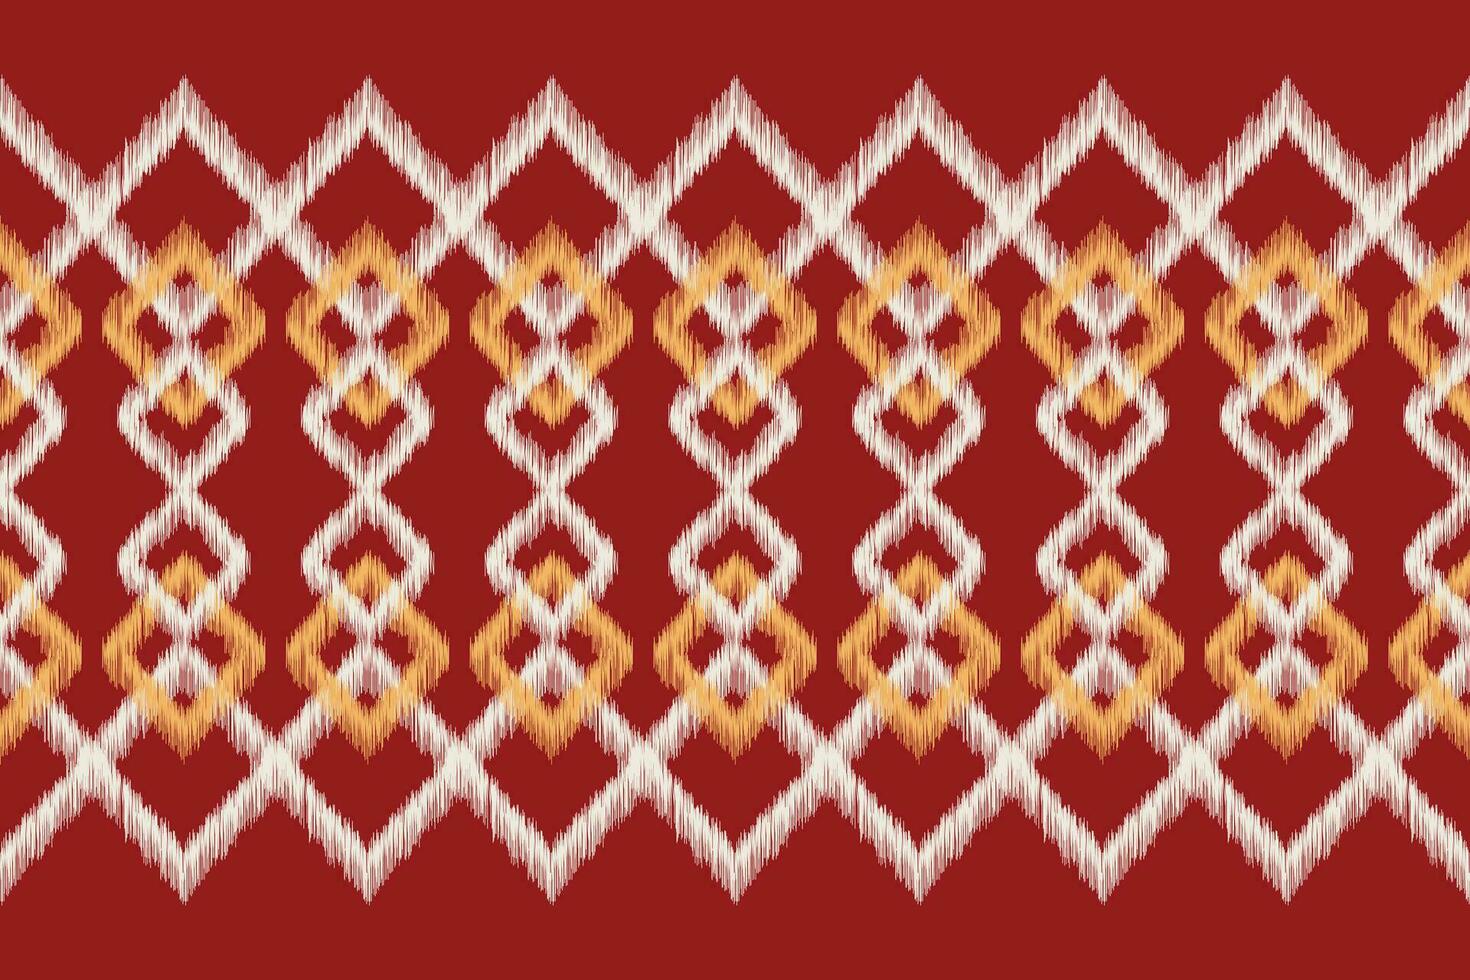 etnisk ikat tyg mönster geometrisk stil.afrikansk ikat broderi etnisk orientalisk mönster röd bakgrund. abstrakt, vektor, illustration.textur, kläder, ram, dekoration, matta, motiv. vektor